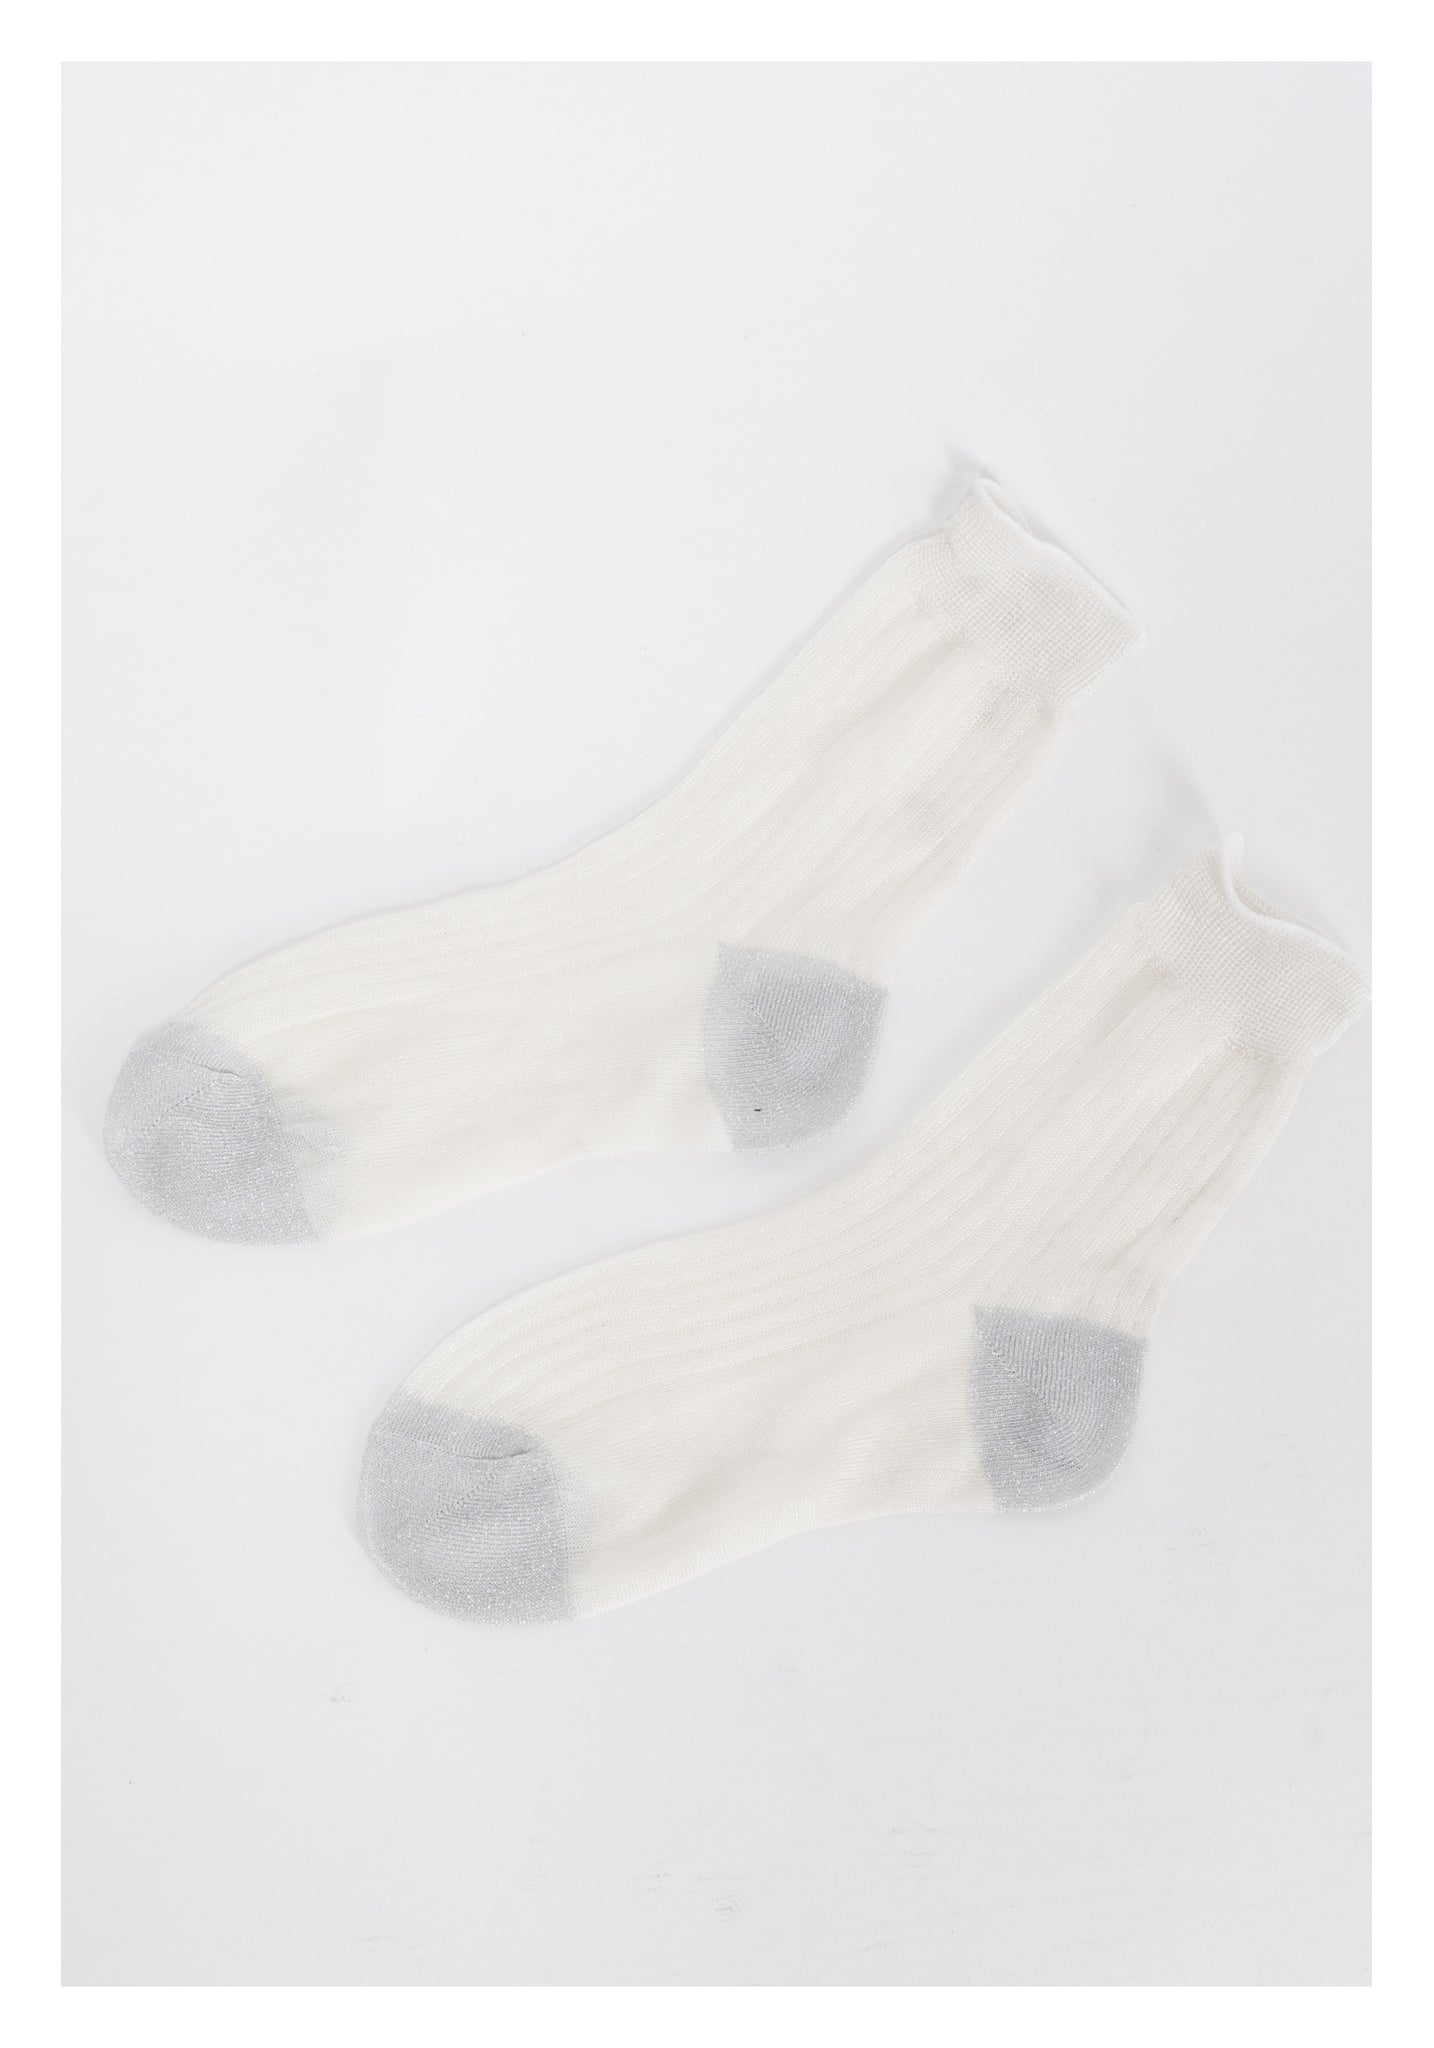 Silver White Shinny Socks - whoami